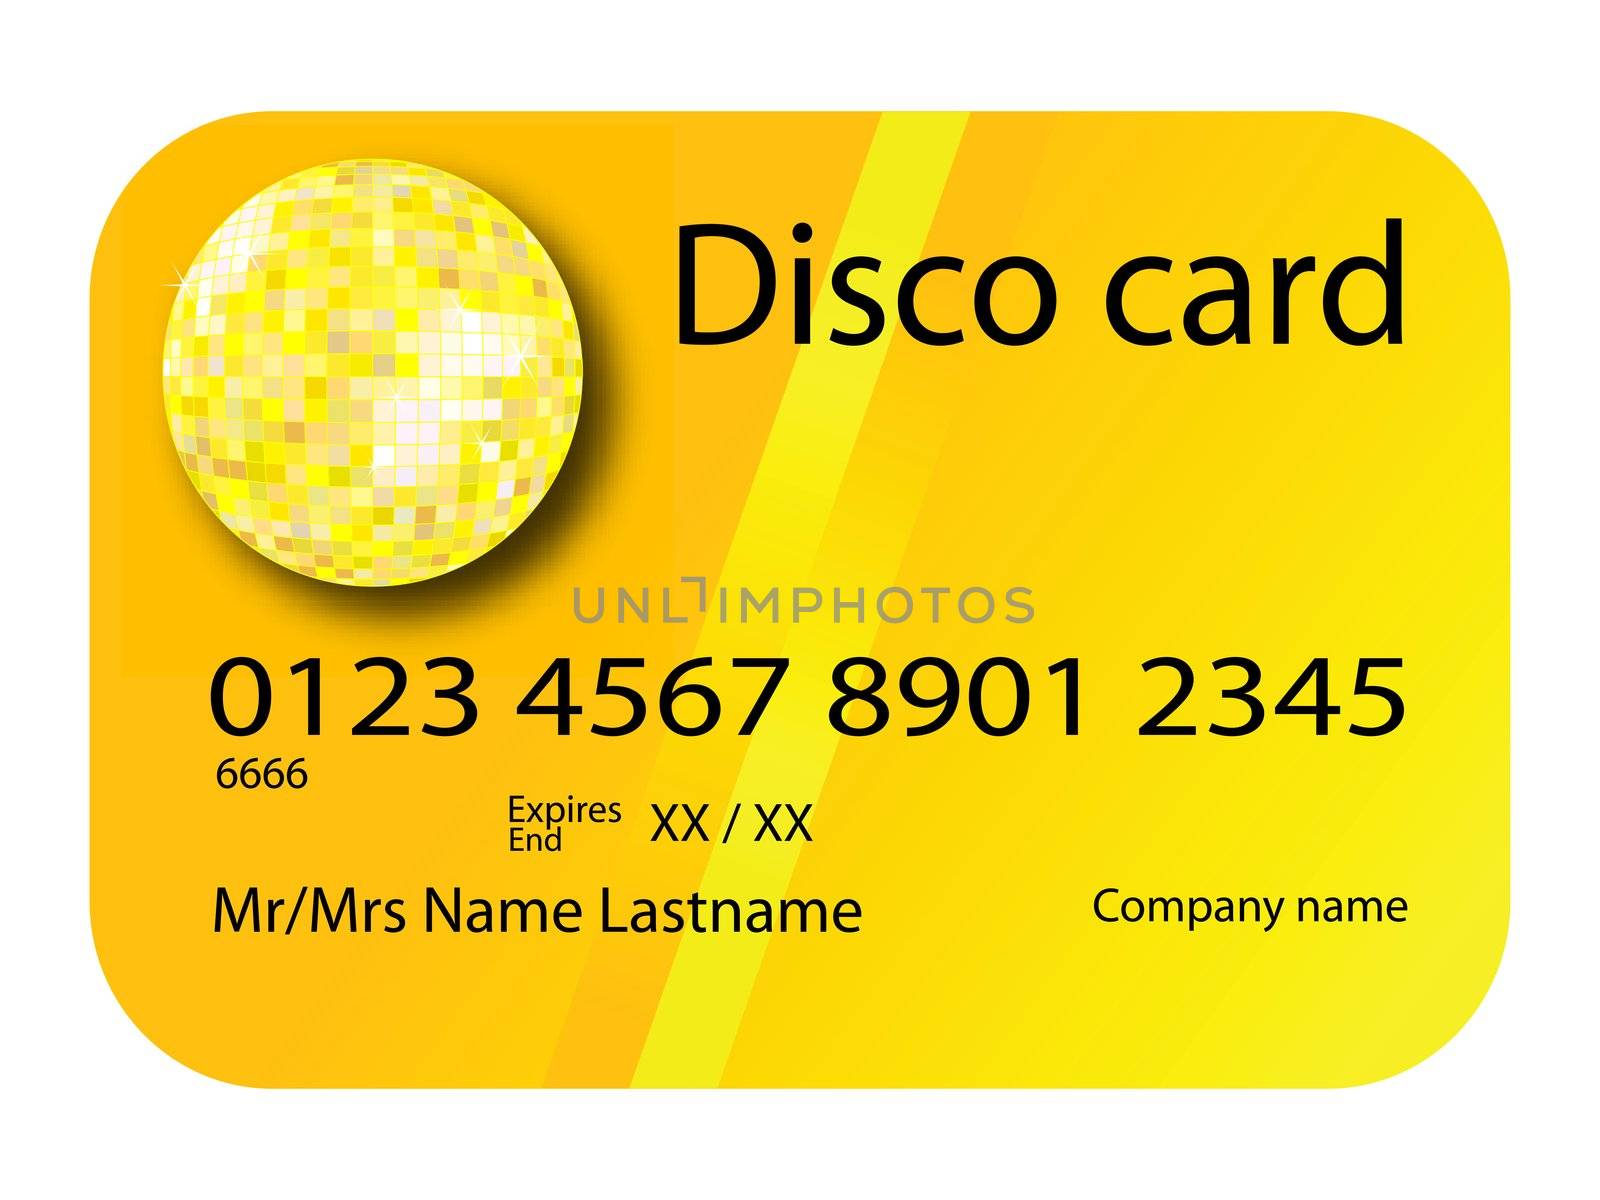 credit card disco yellow by robertosch